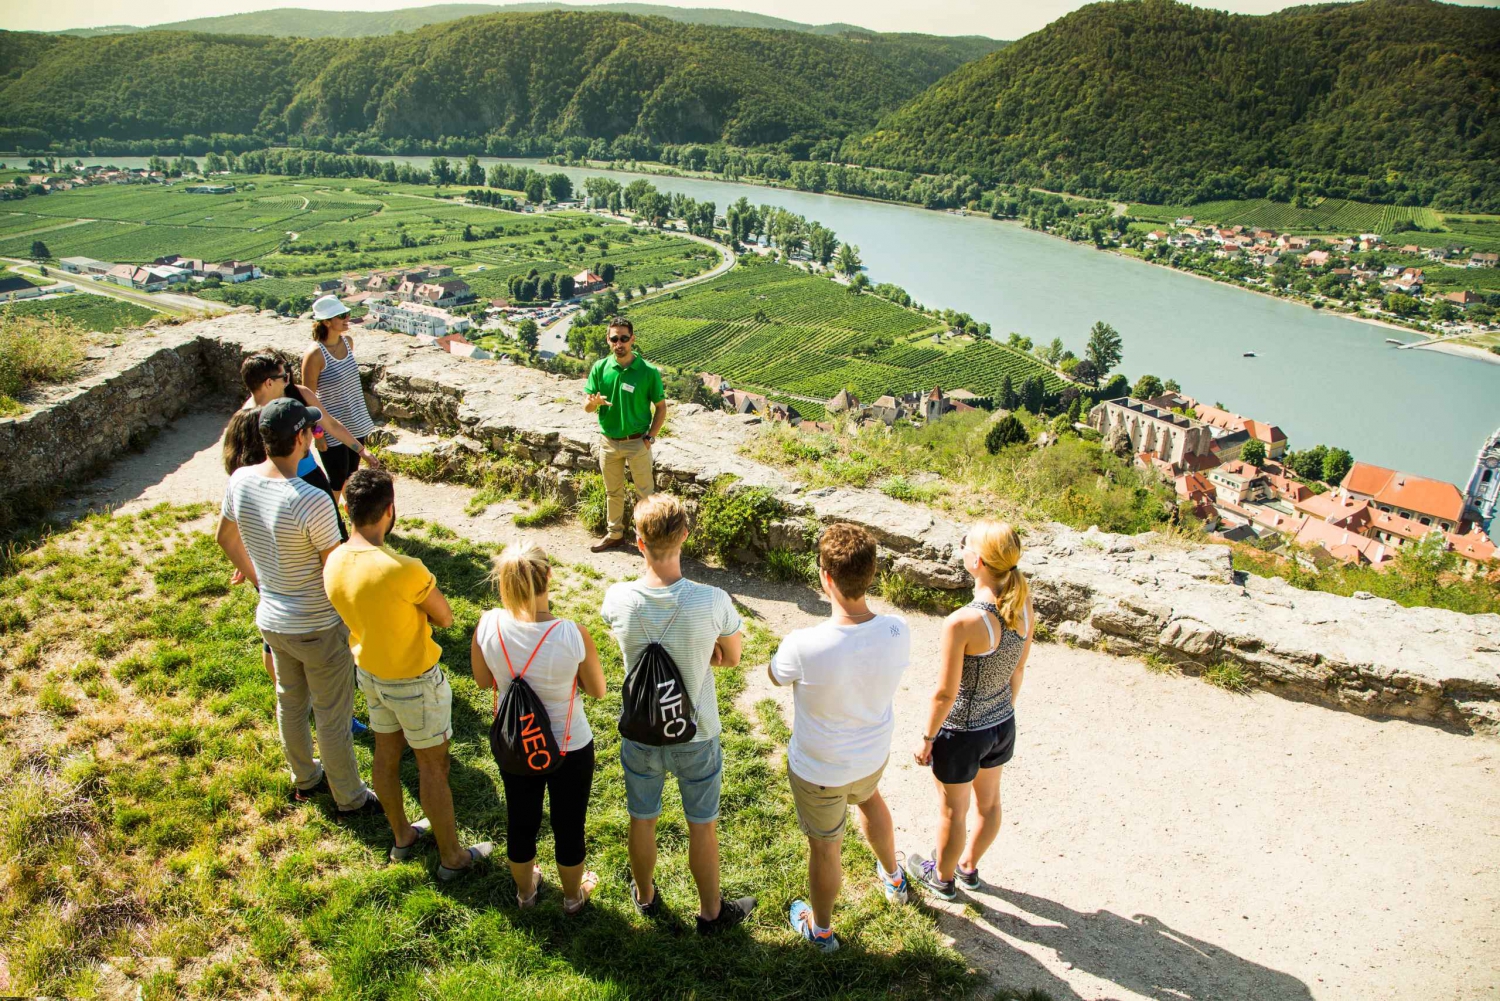 Grape Grazing: Wachau Valley Winery Biking Tour